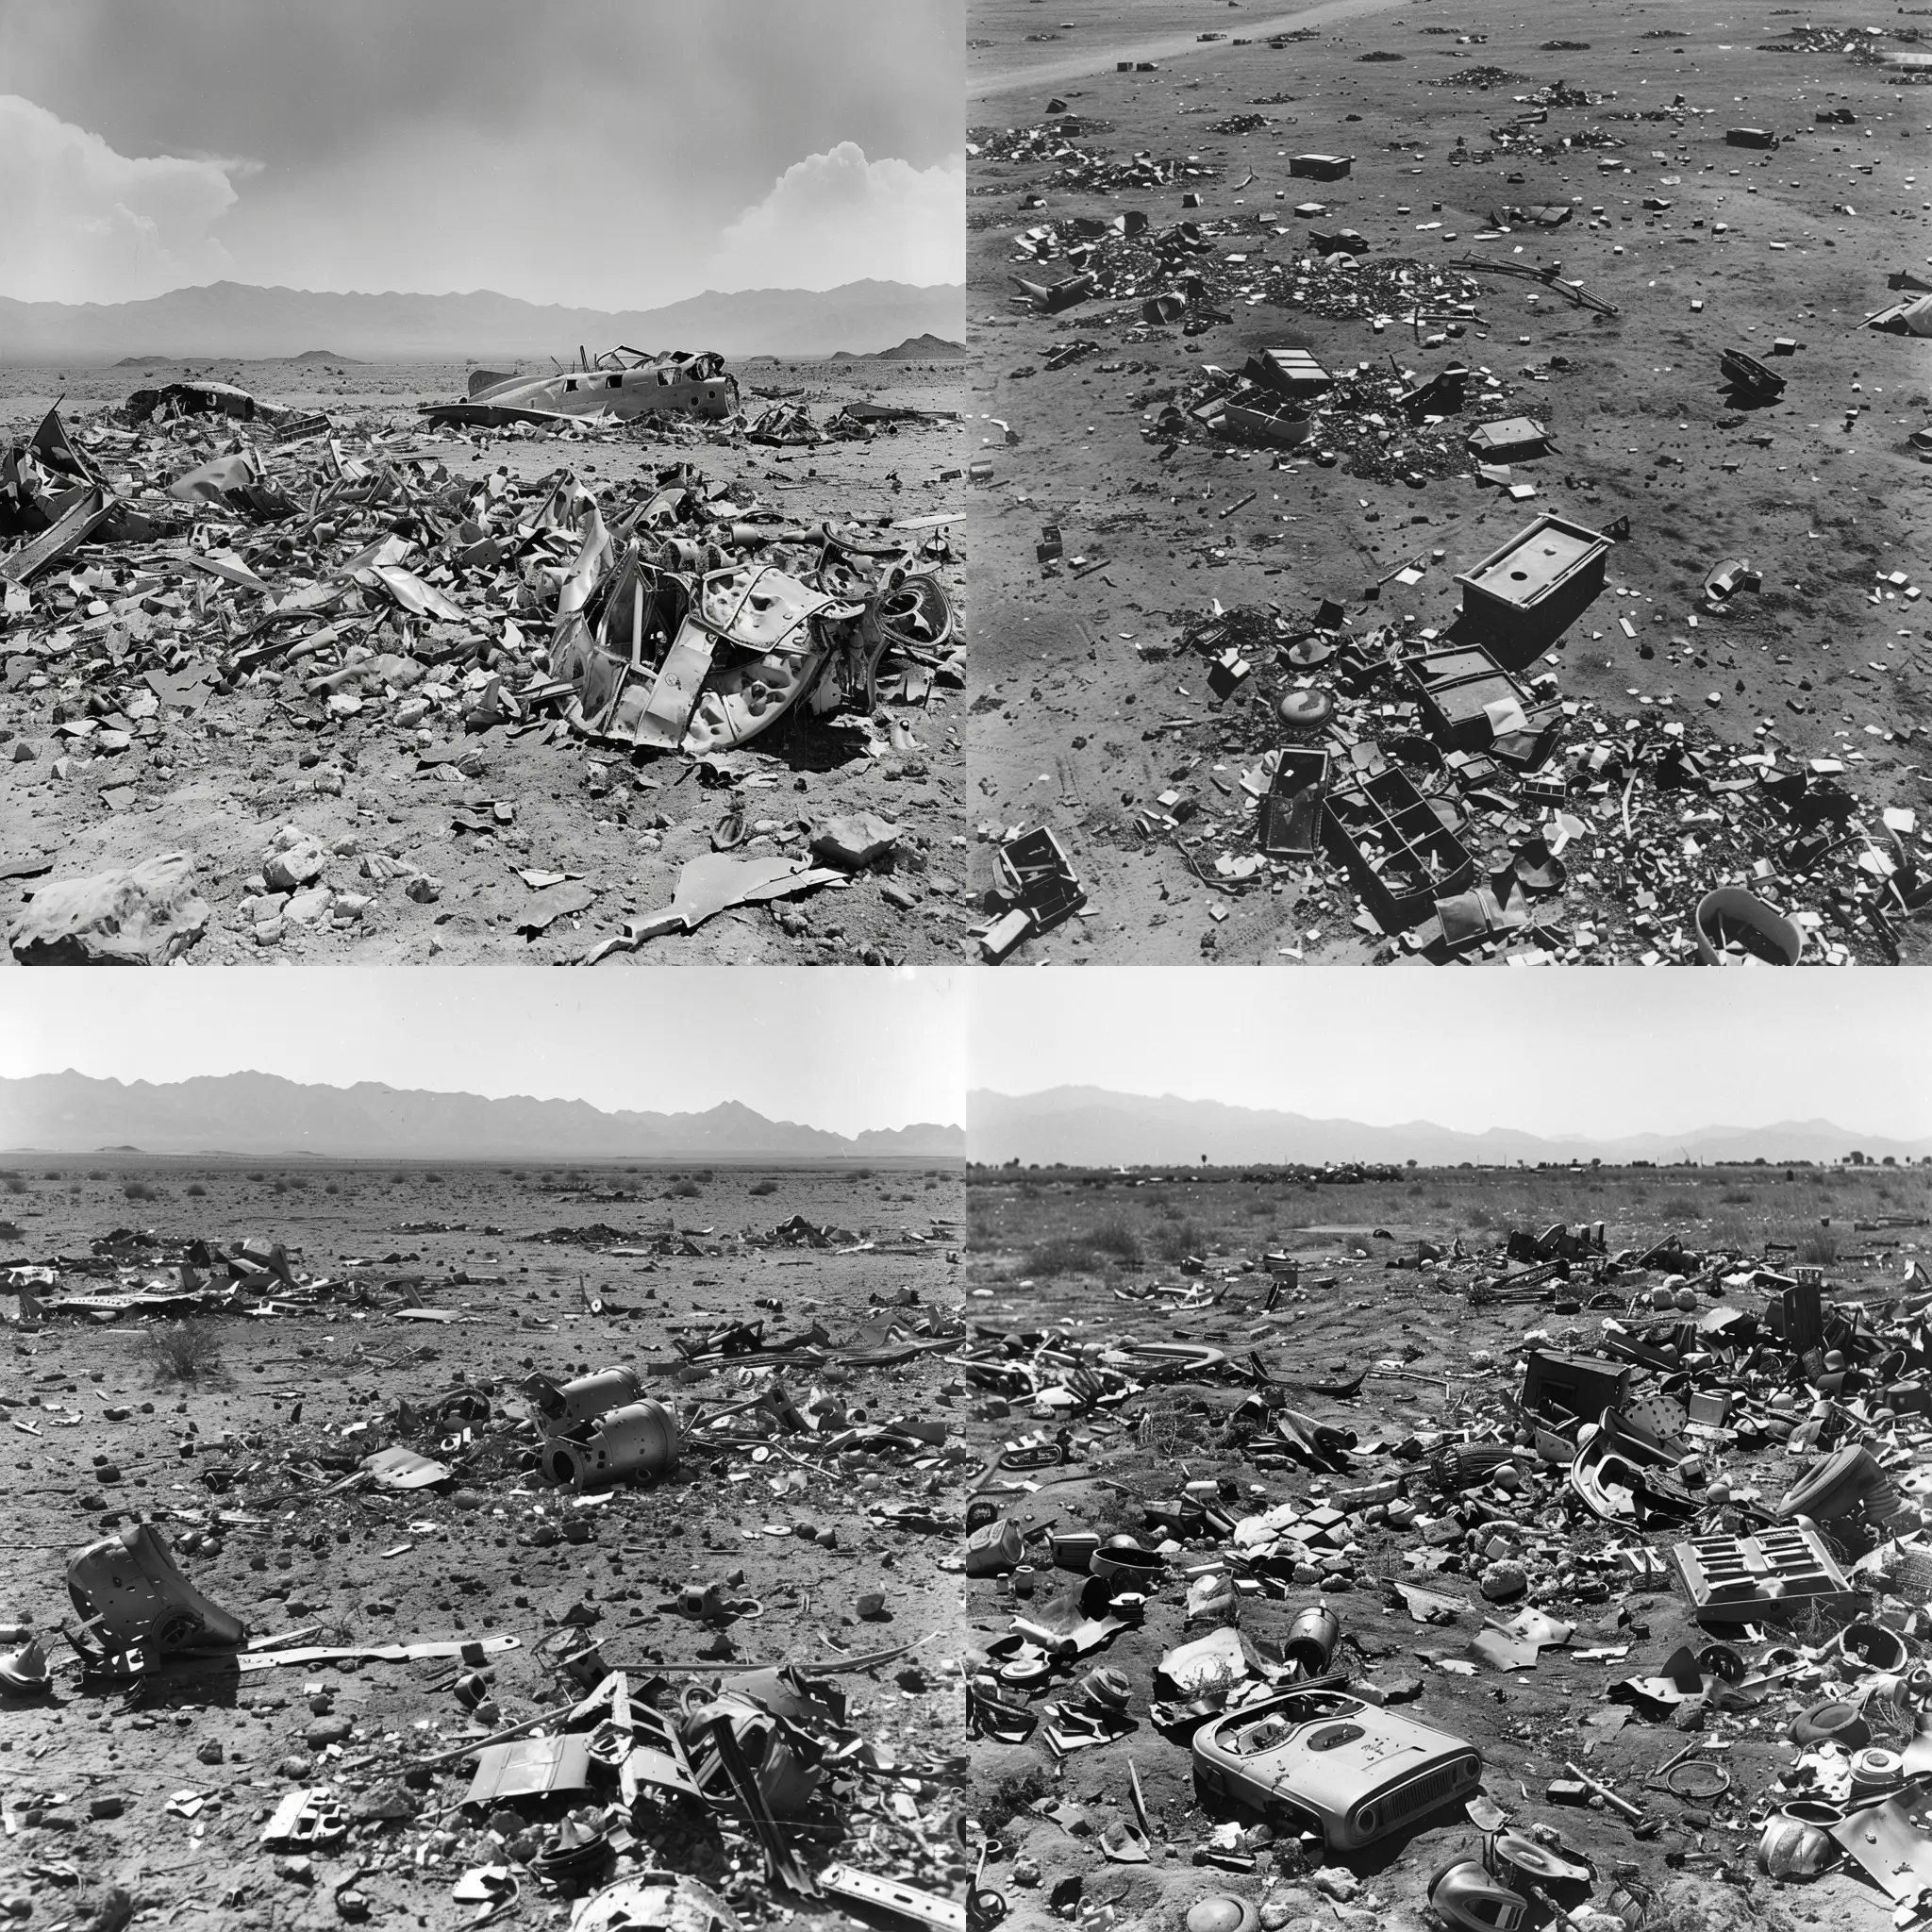 Roswell UFO crash debris field photo from 1947